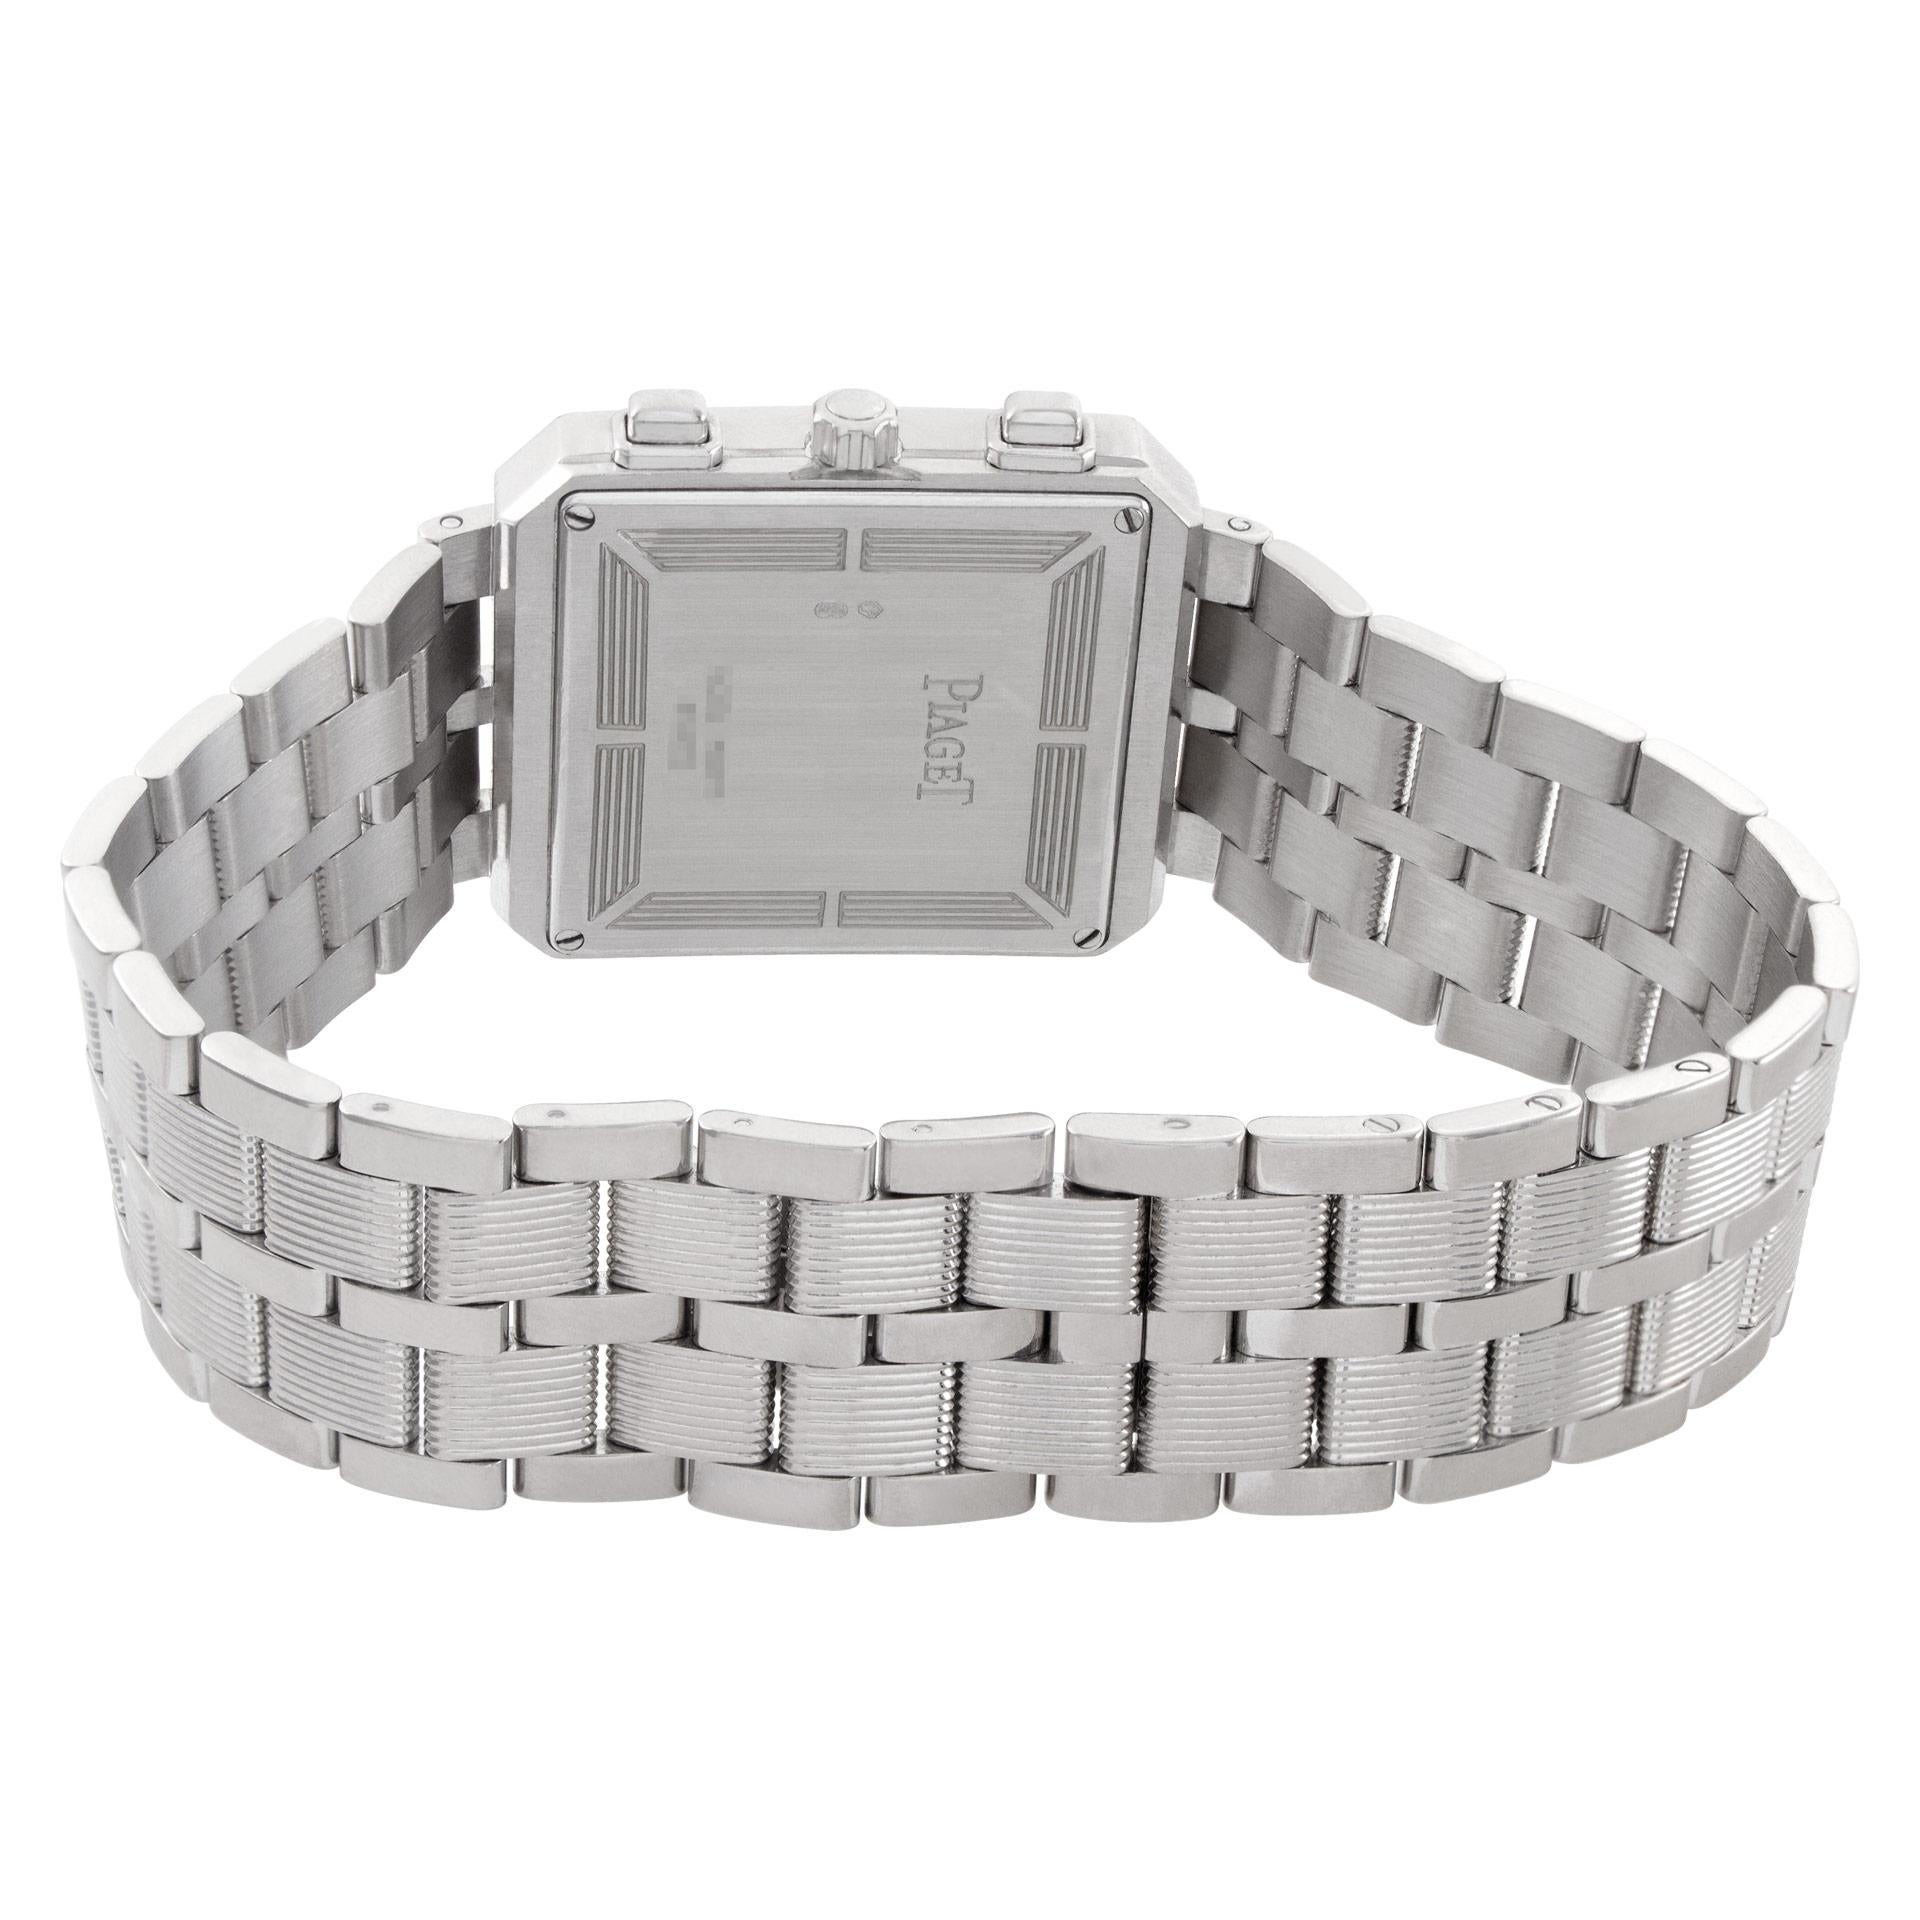 piaget quartz watch stainless steel